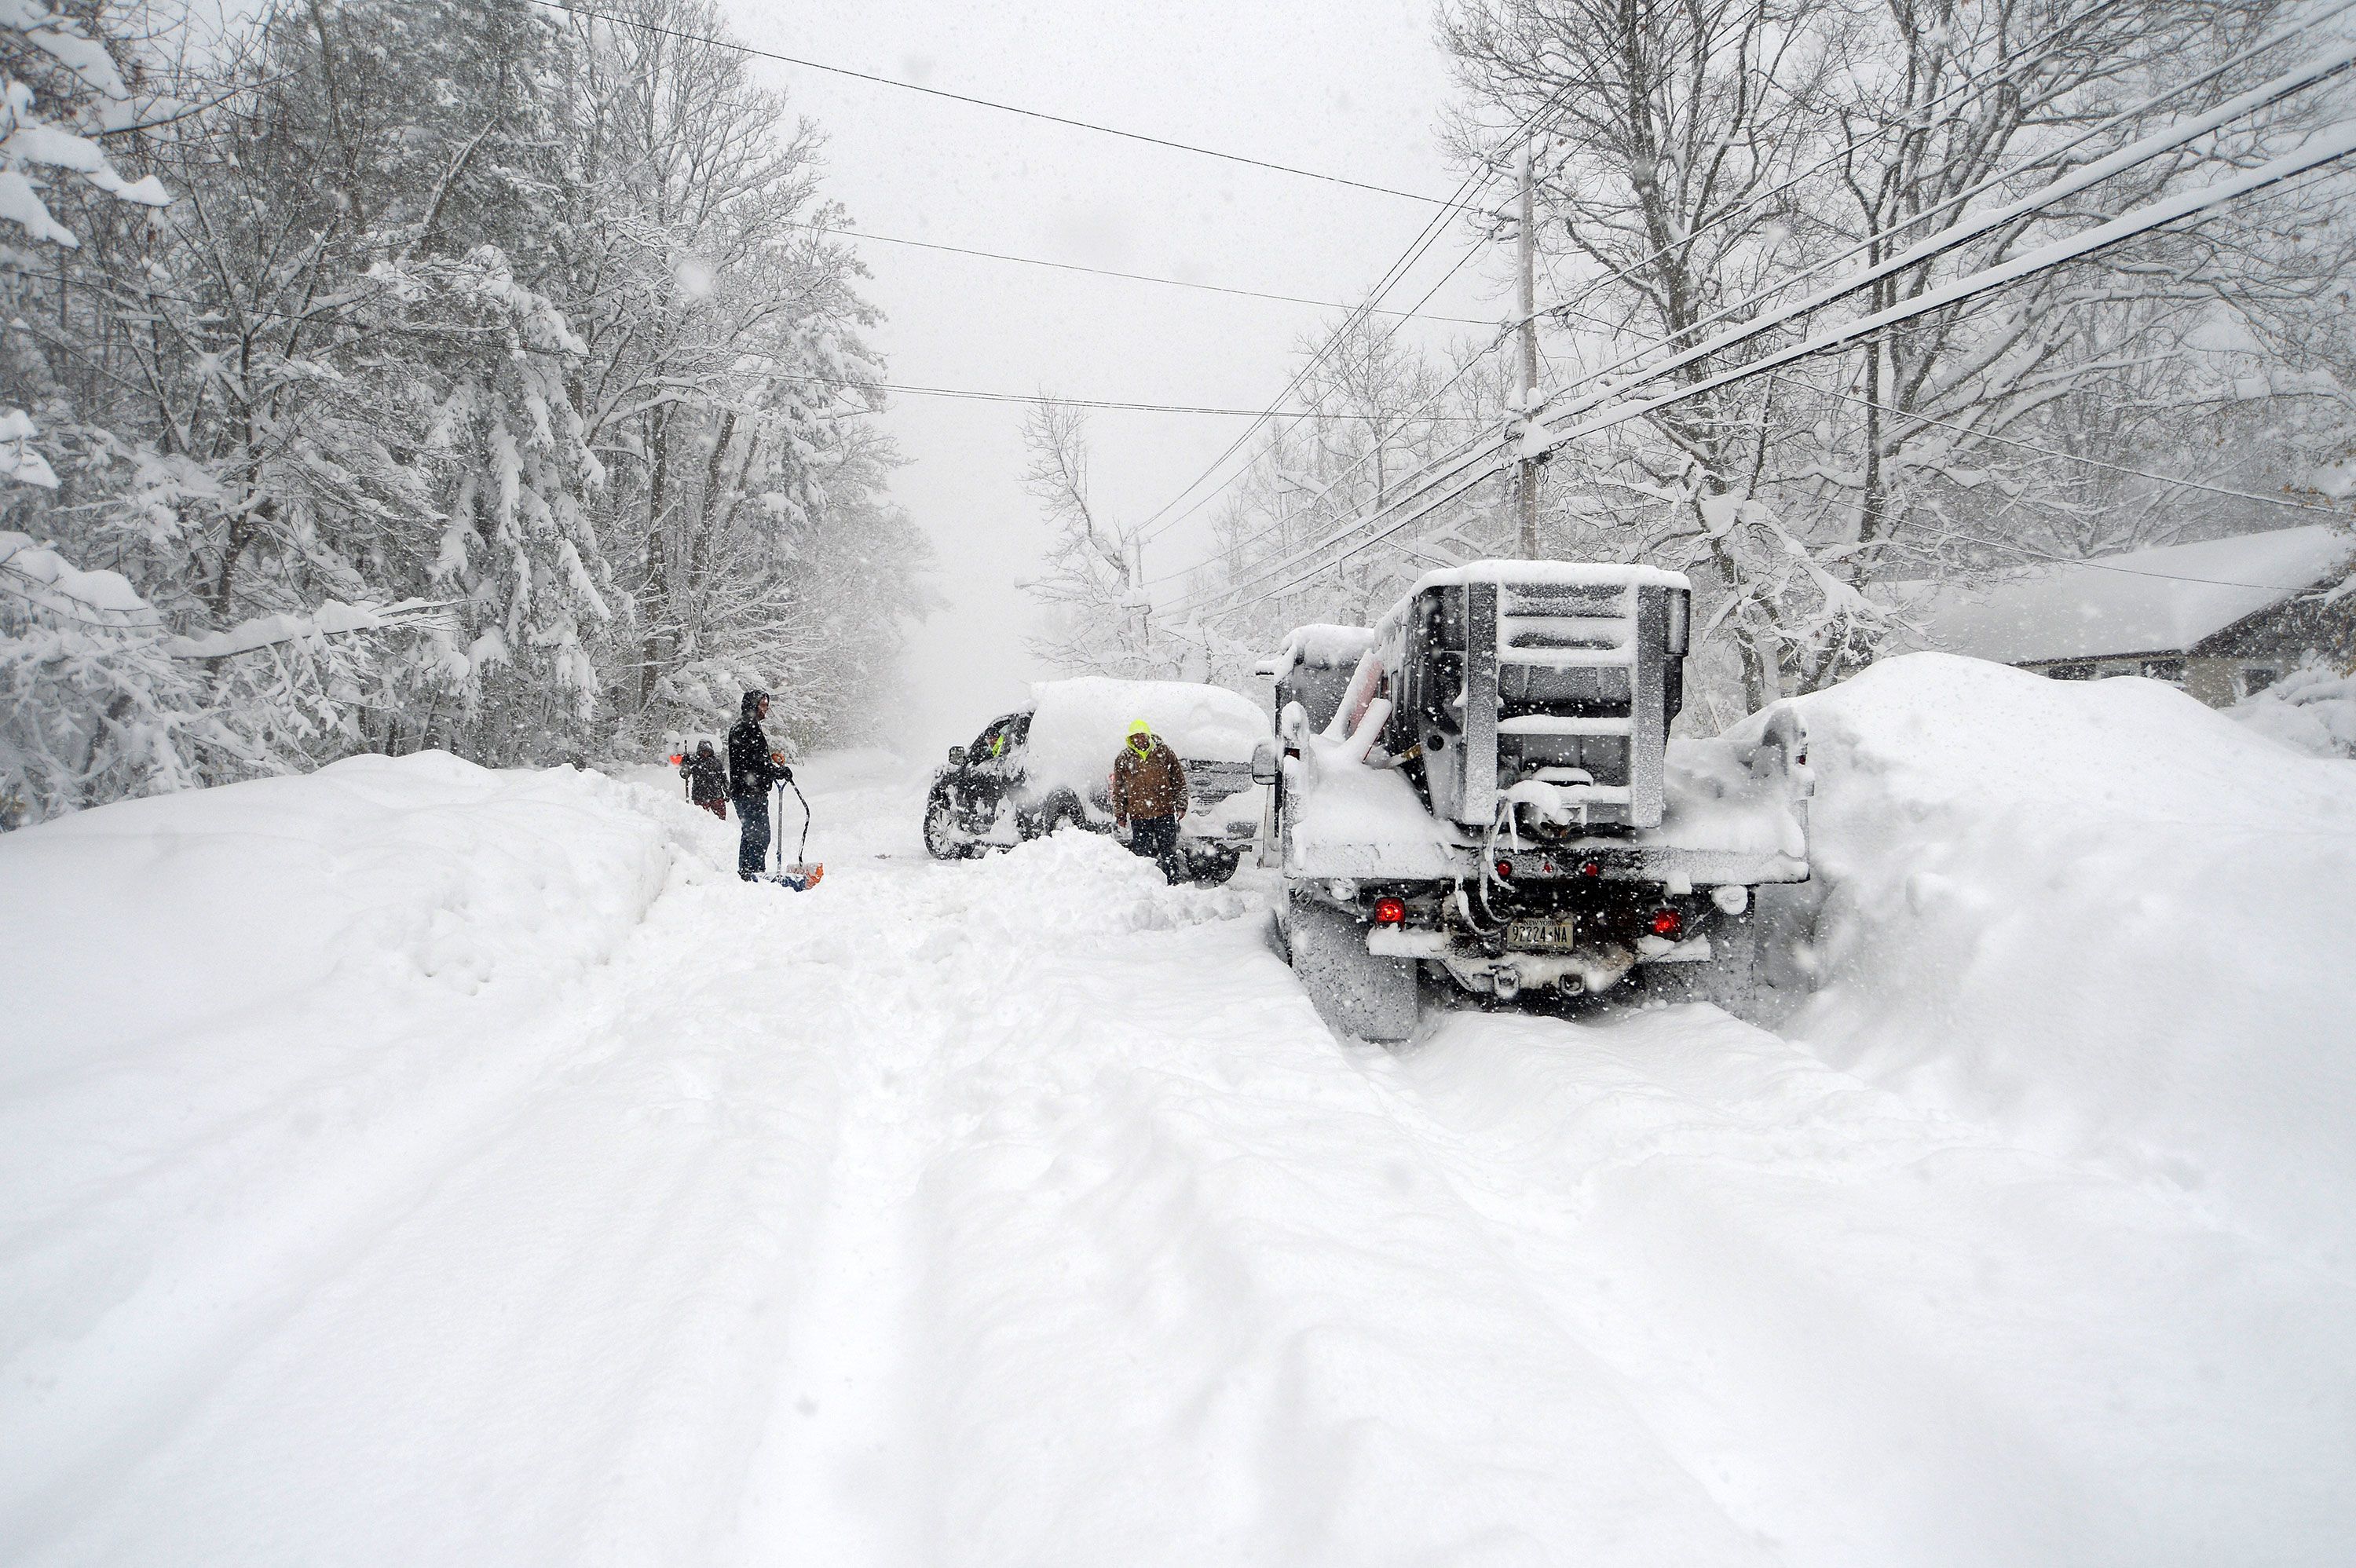 Snowfall tops 6 feet in western New York, triggering road closures